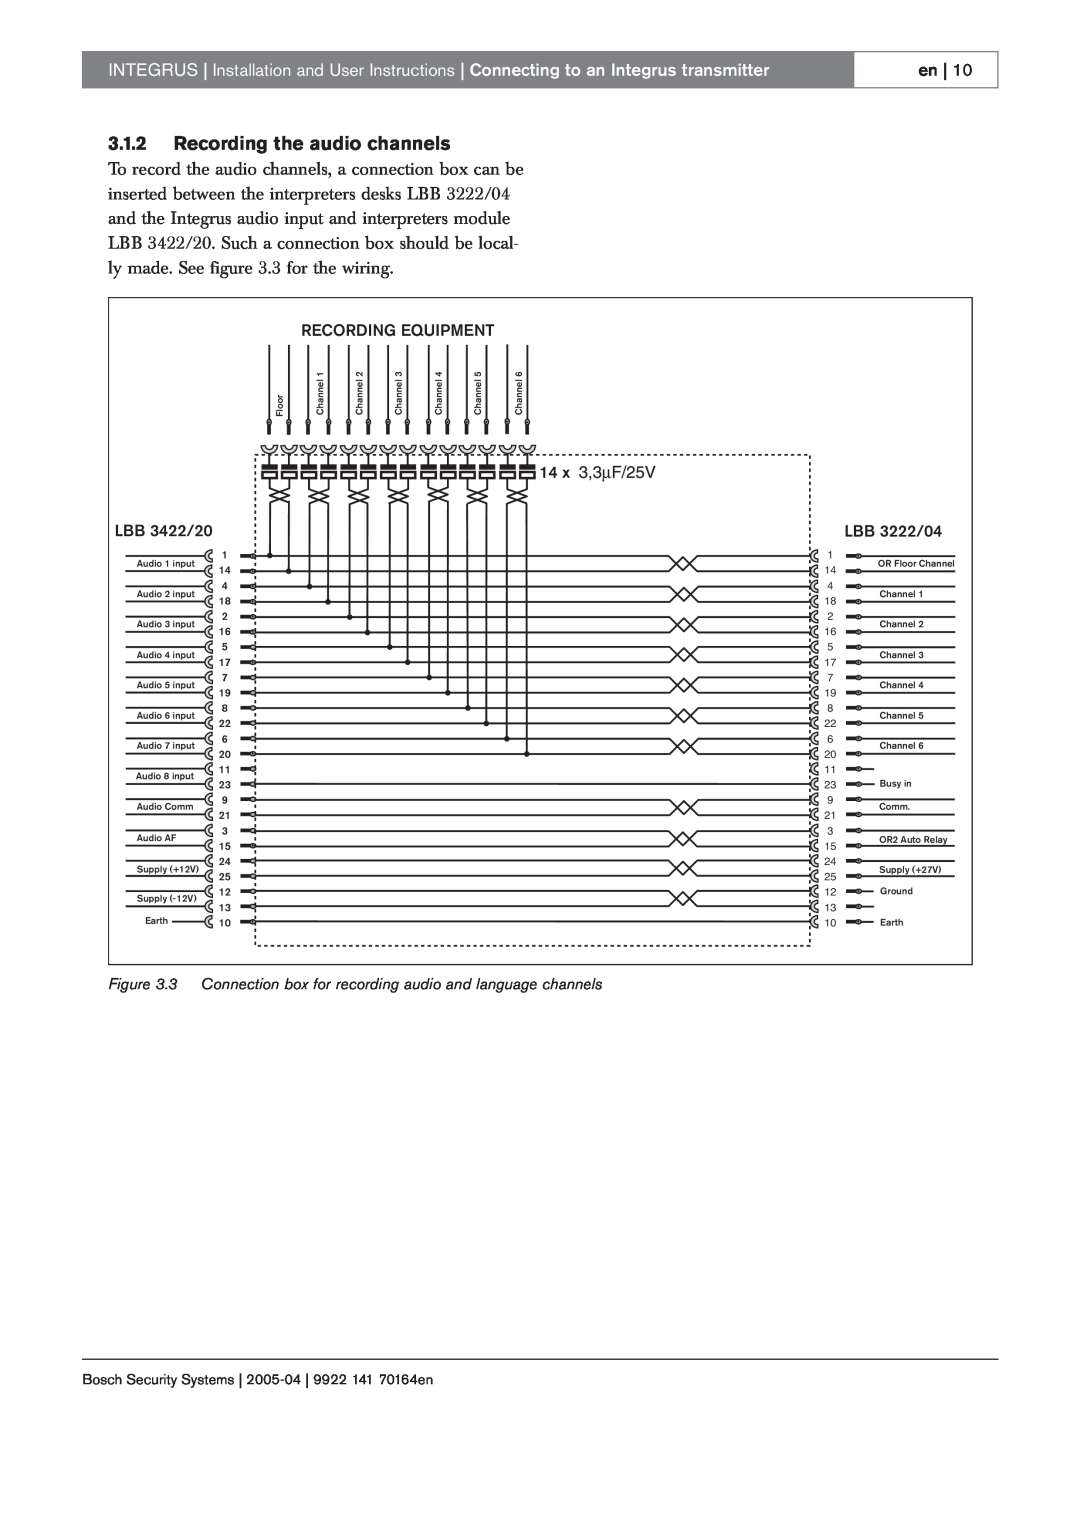 Bosch Appliances manual 3.1.2Recording the audio channels, Recording Equipment, LBB 3422/20, LBB 3222/04 